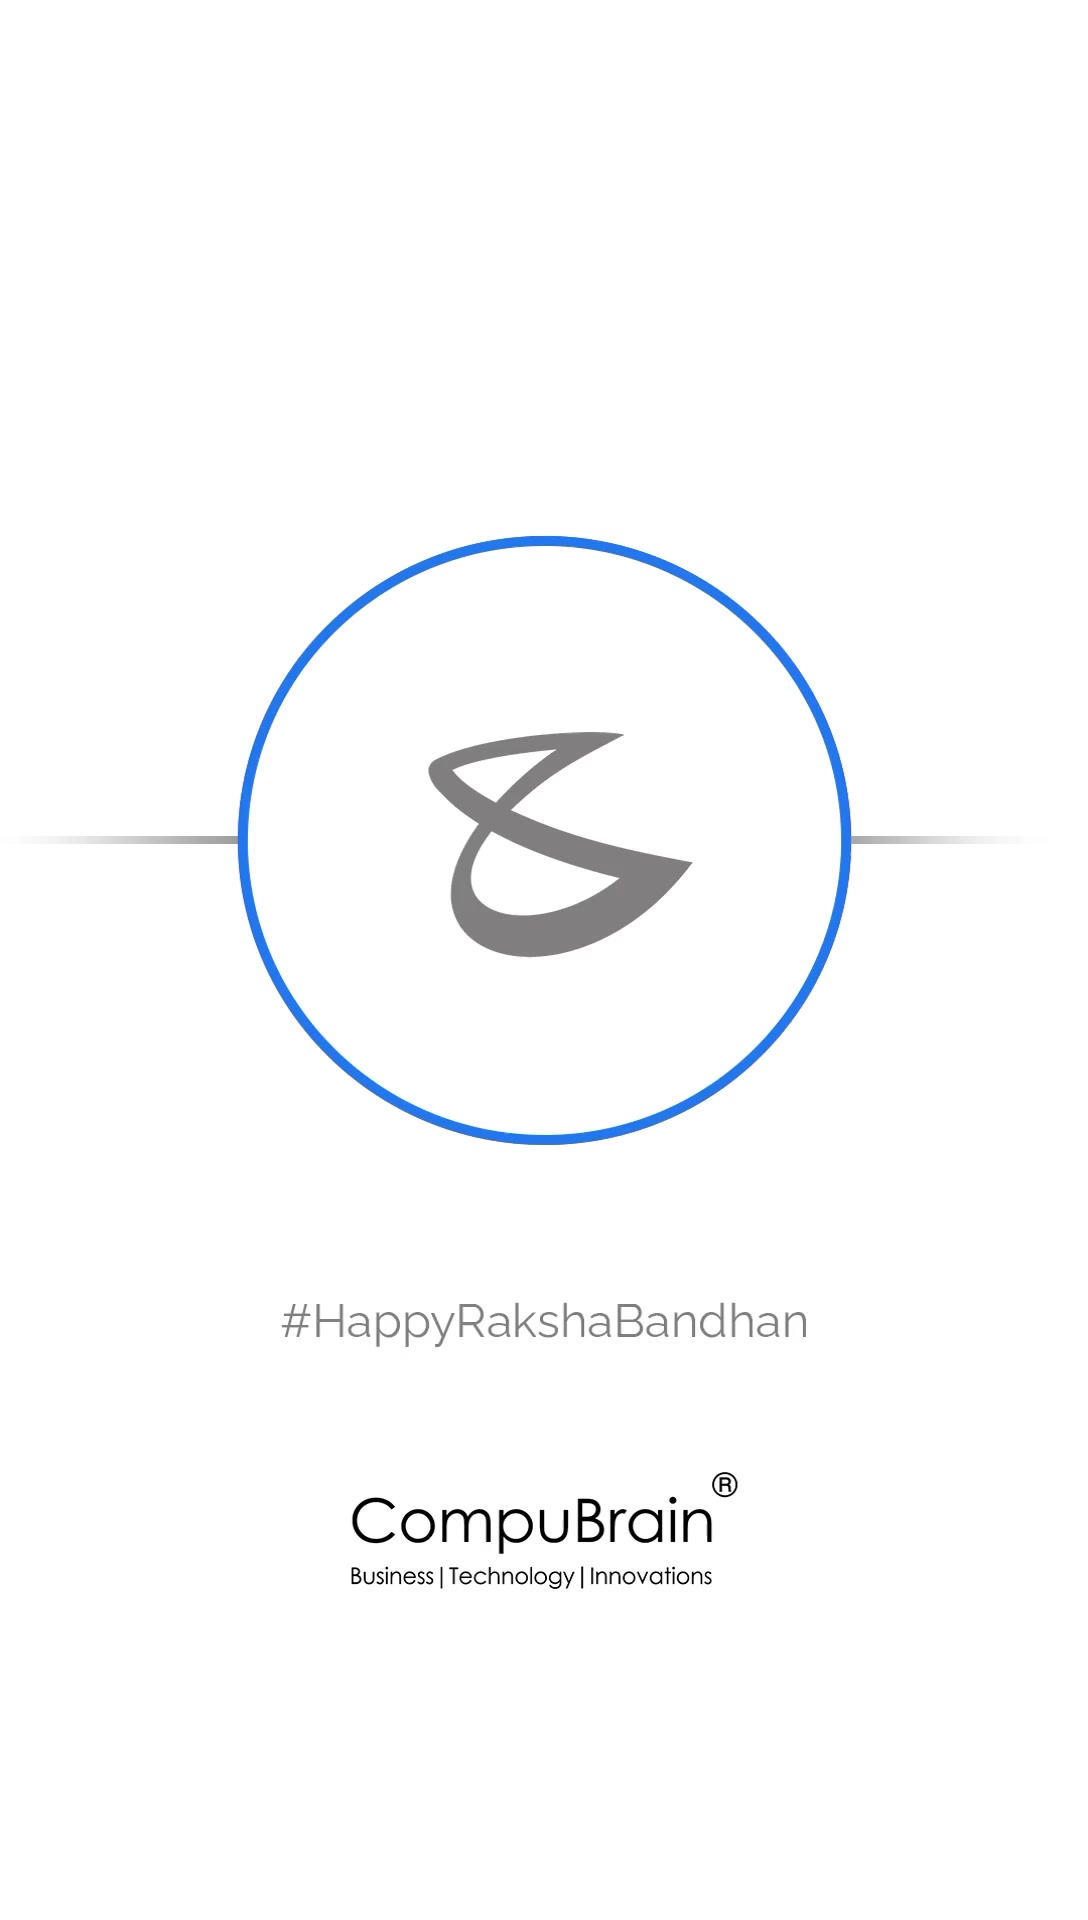 :: Happy Raksha Bandhan ::

#rakshabandhan #business #technology #innovations #indianfestival #india